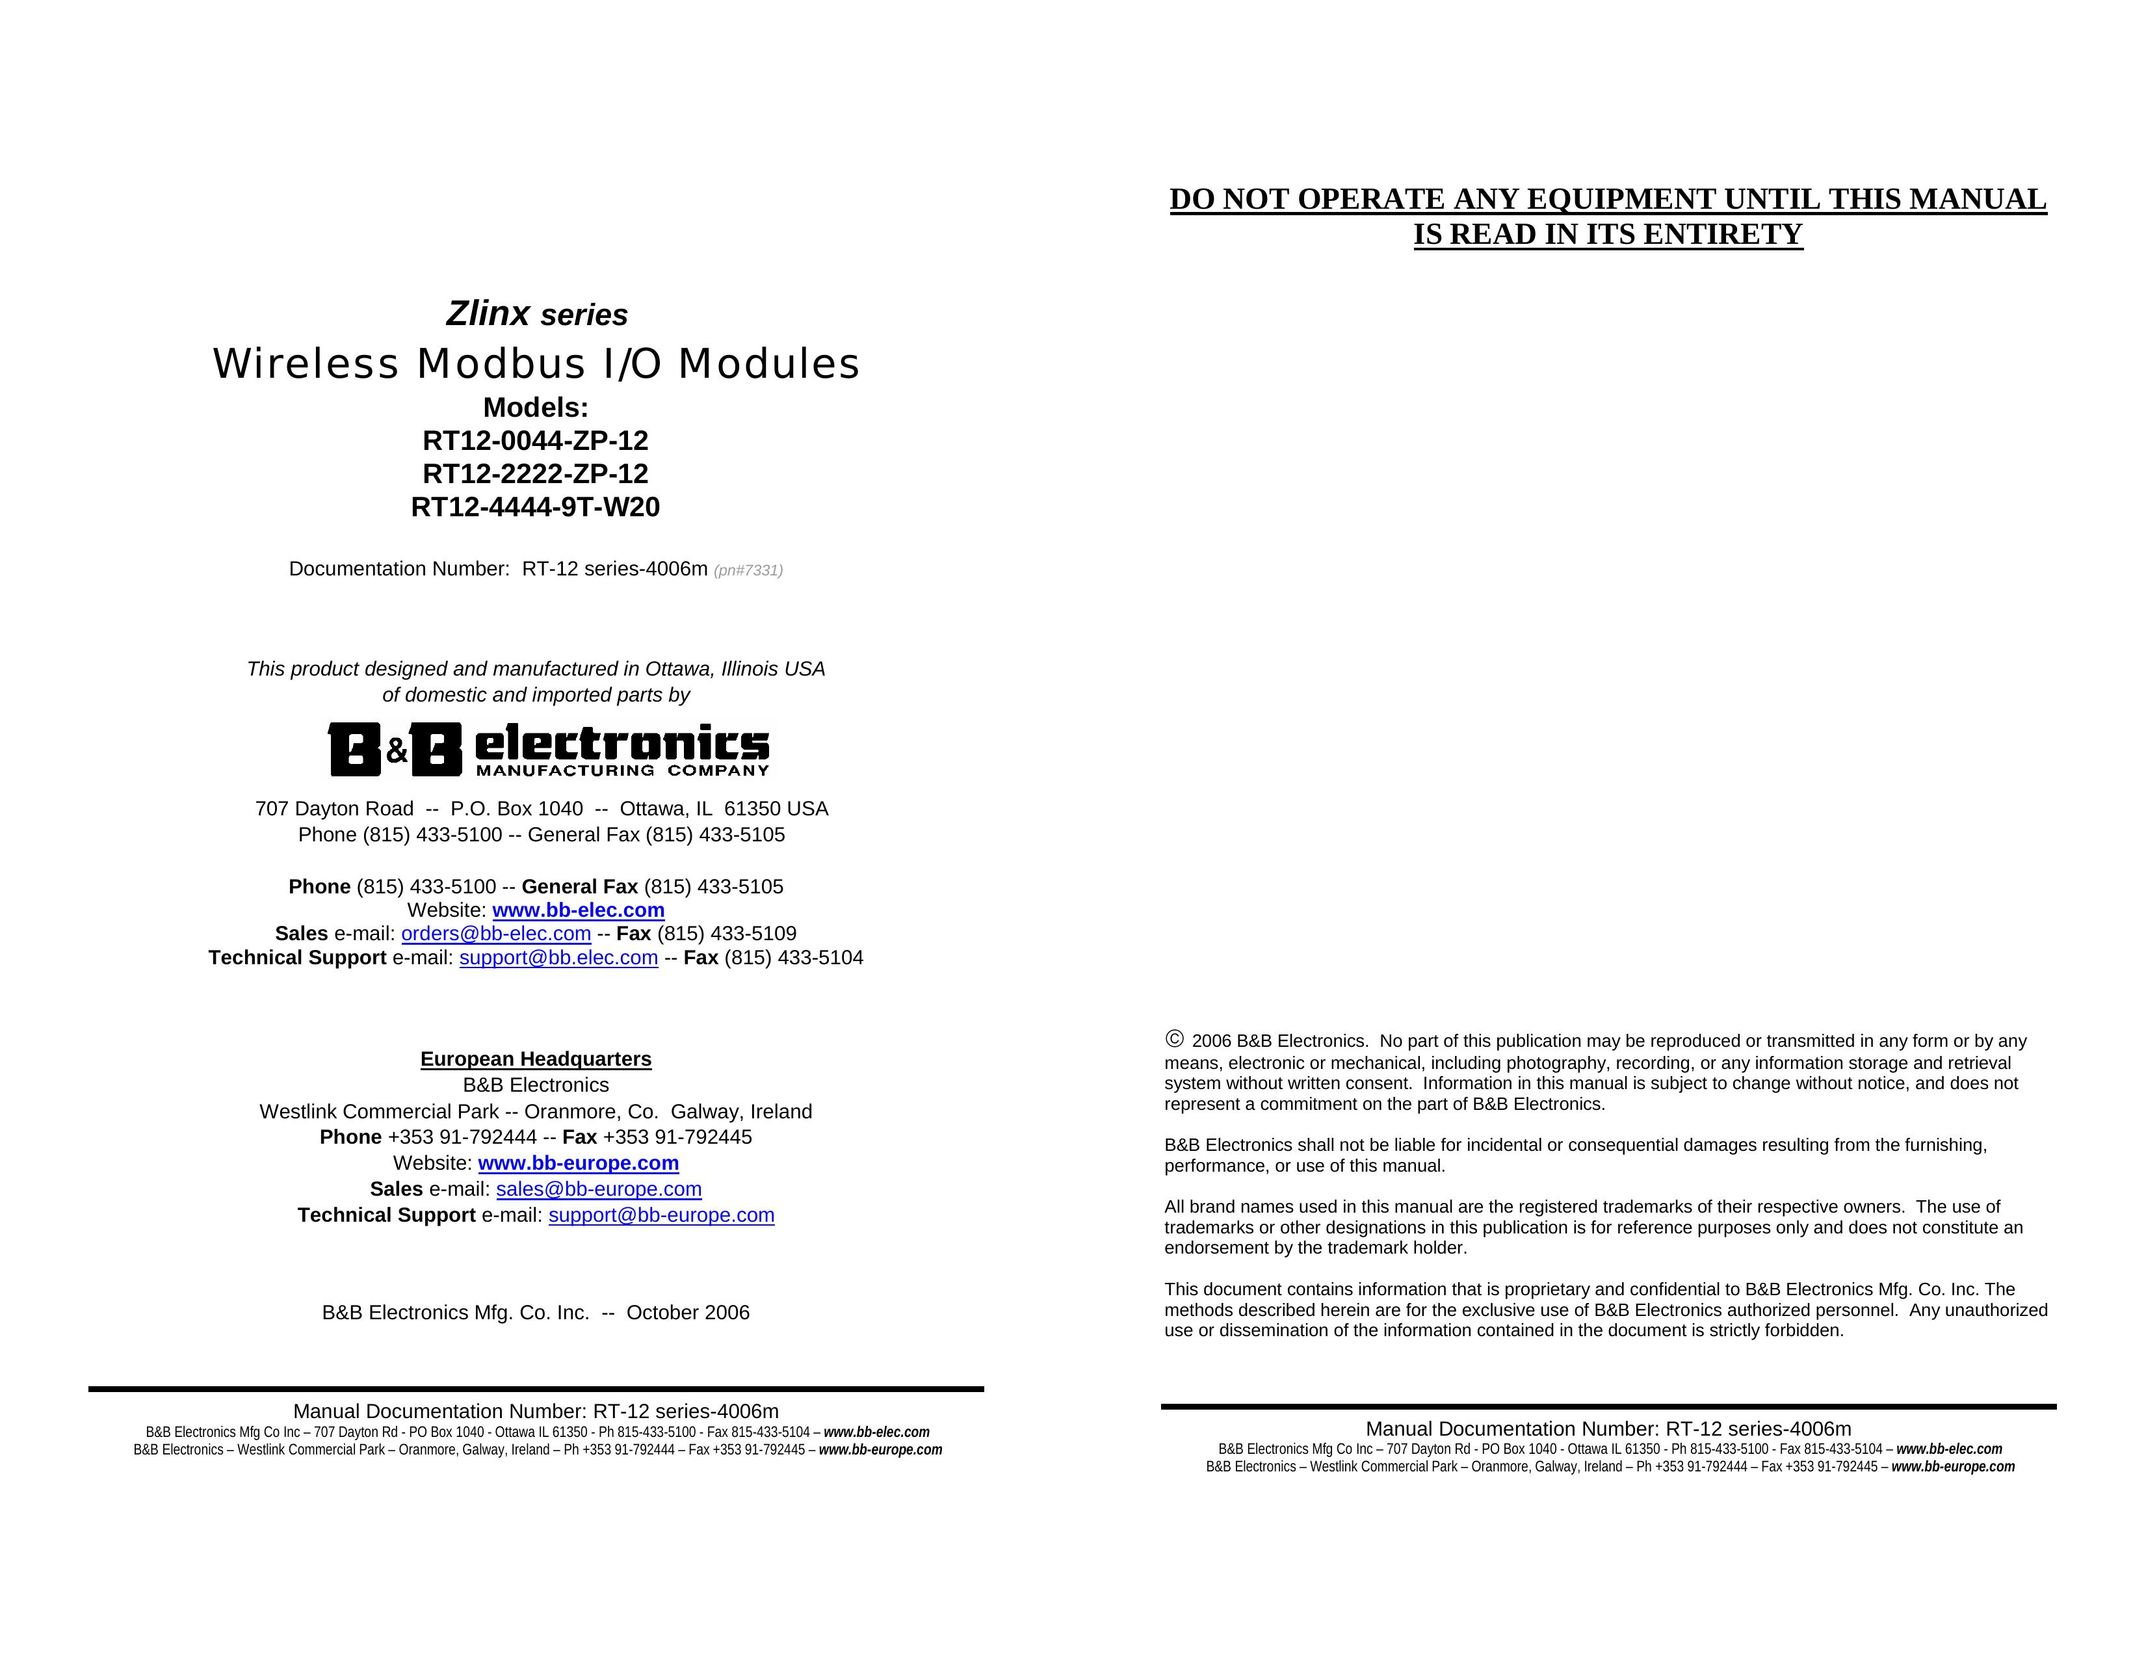 B&B Electronics RT12-4444-9T-W20 Mouse User Manual